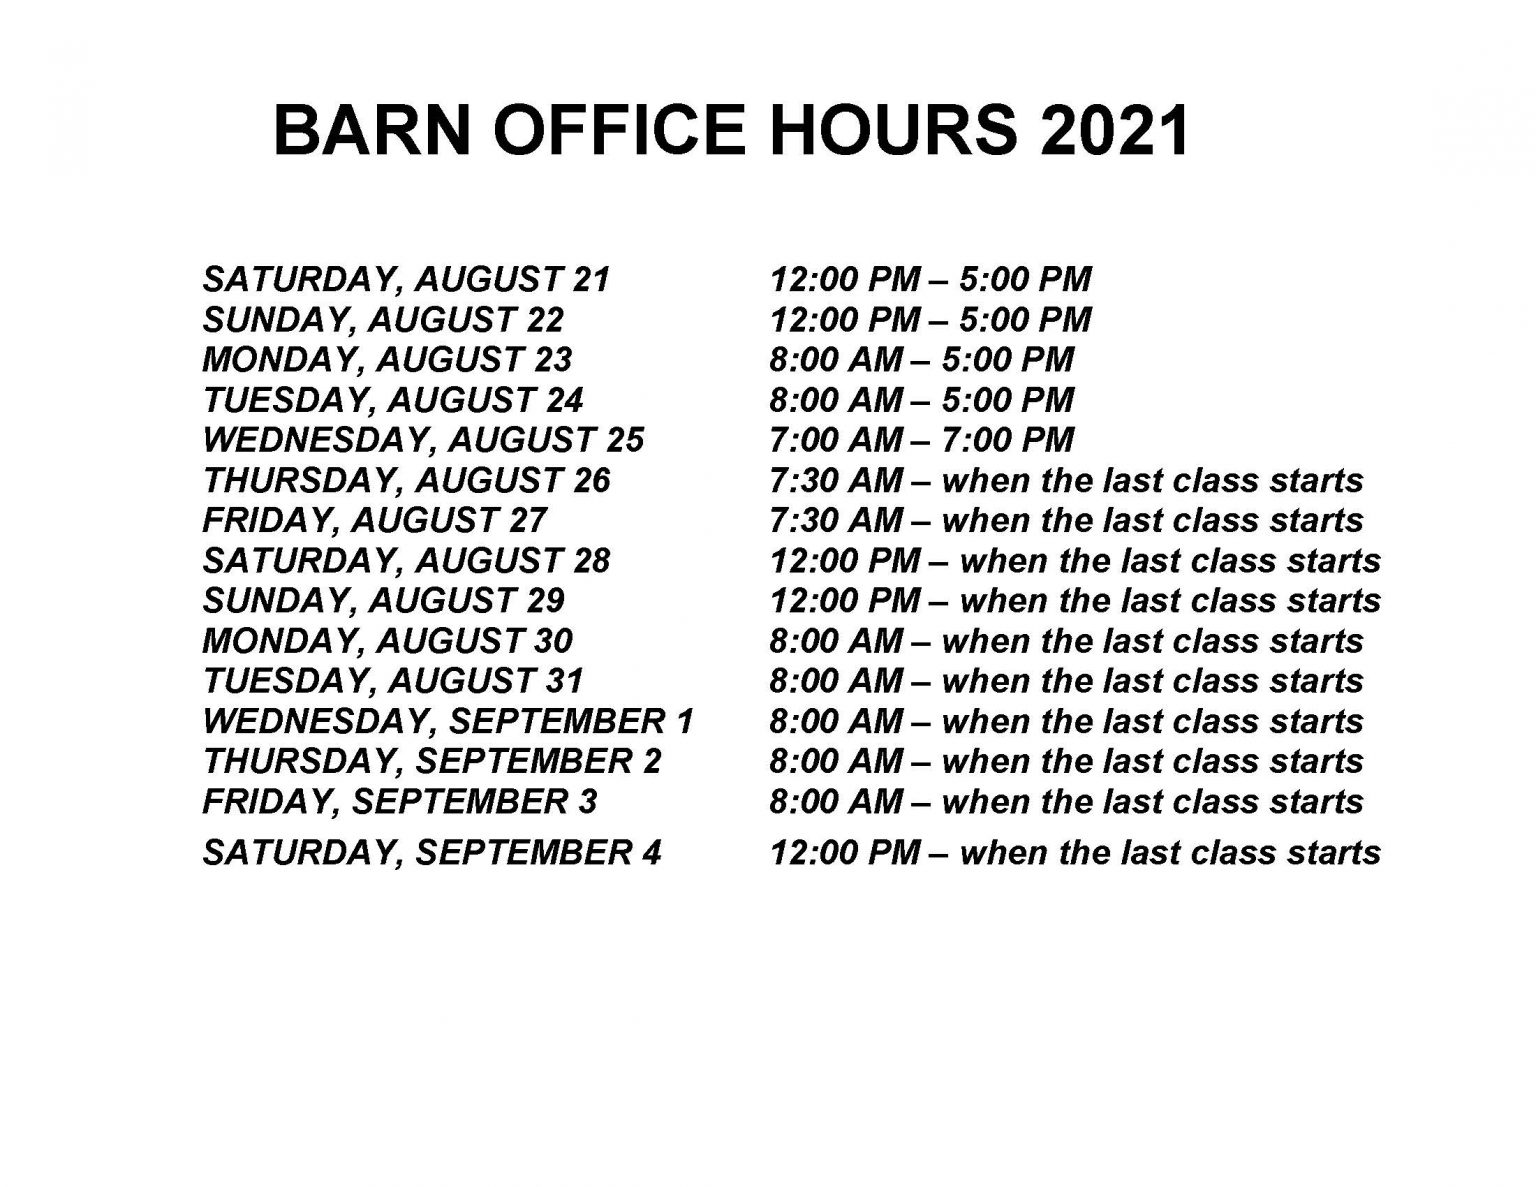 BARN-OFFICE-HOURS-2021-1536×1187